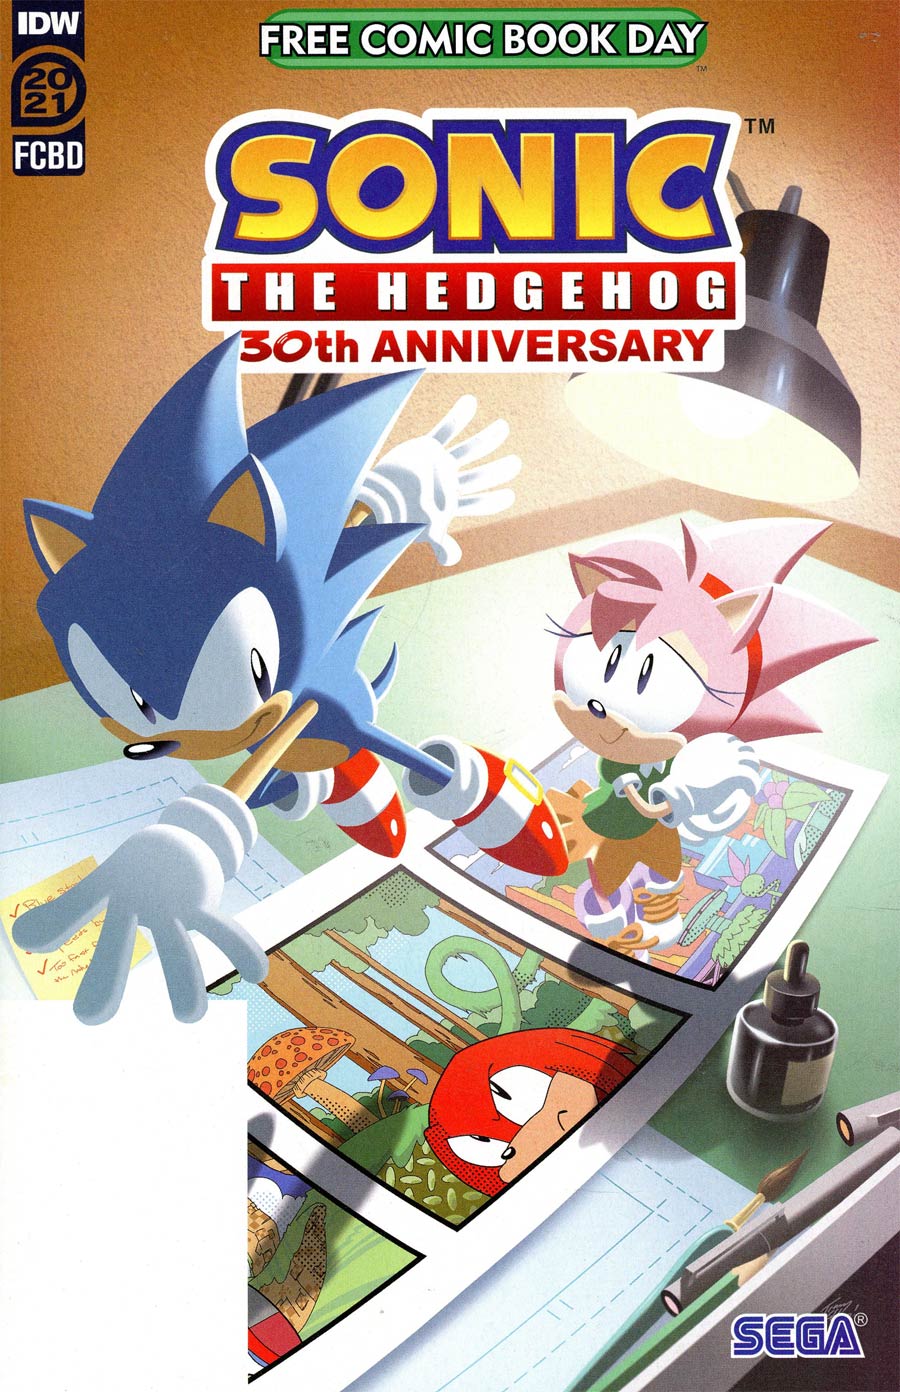 Sonic The Hedgehog 30th Anniversary FCBD 2021 Edition